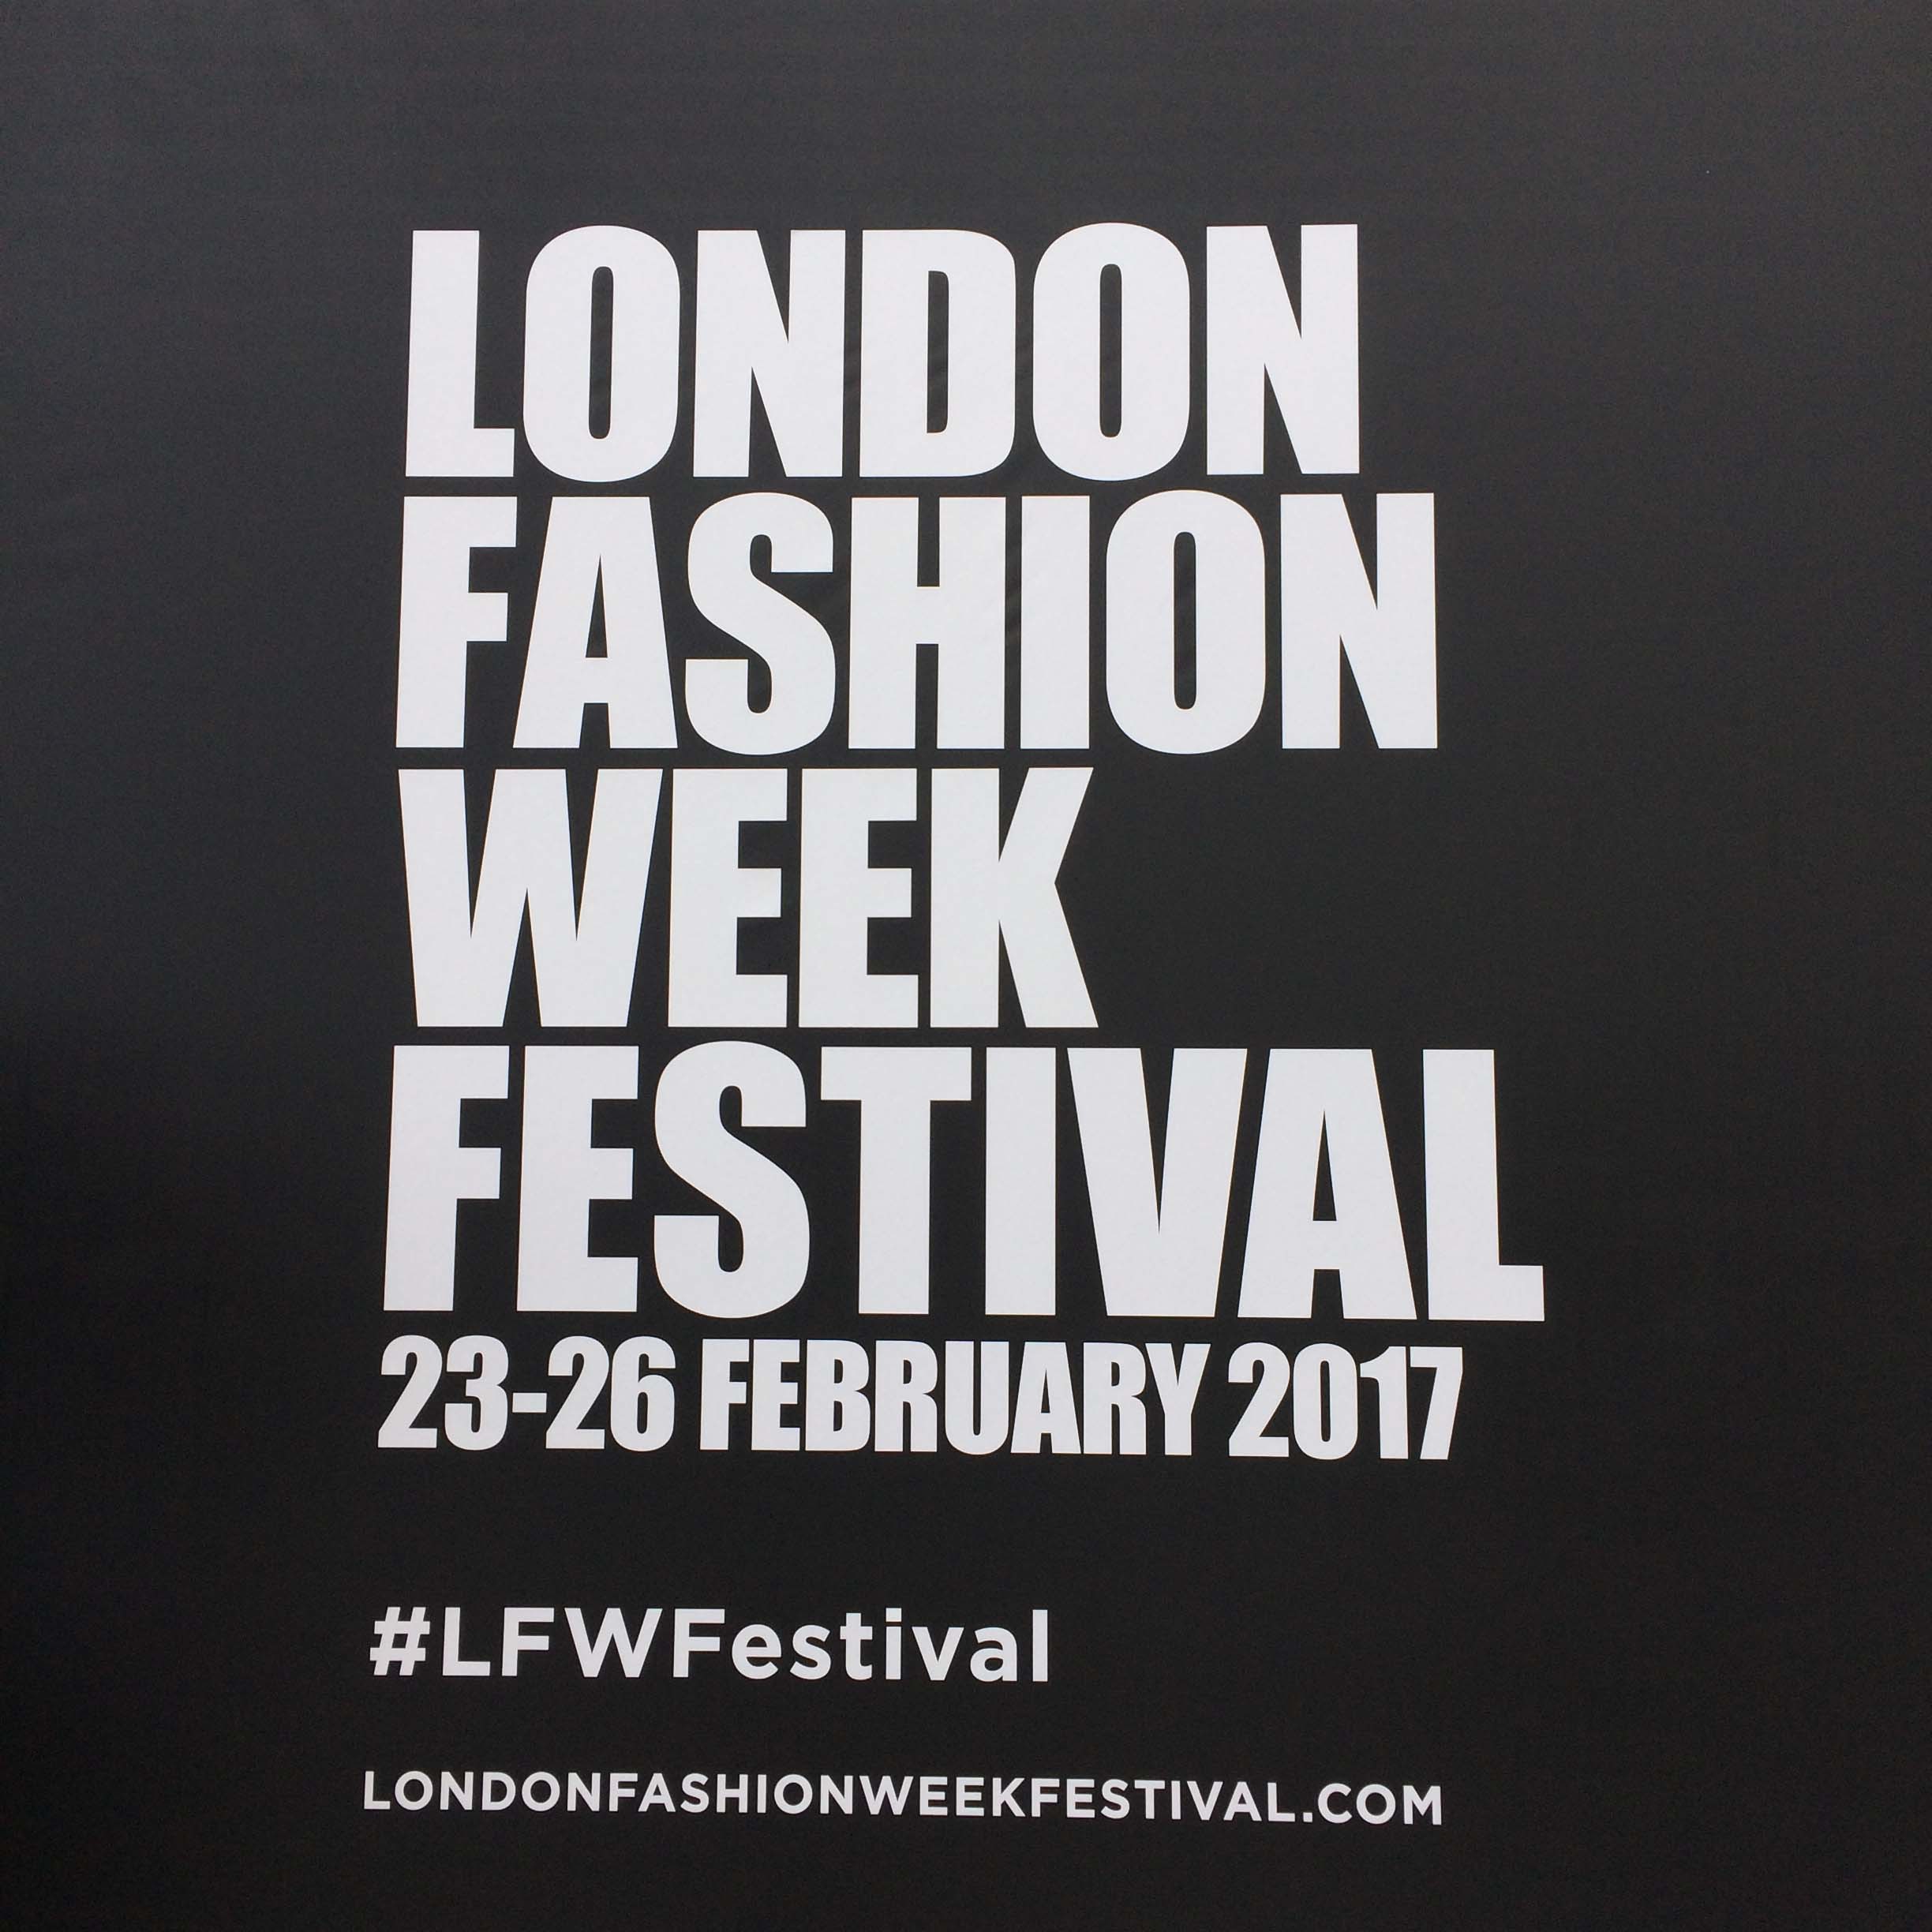 LONDON FASHION WEEK FESTIVAL 2017